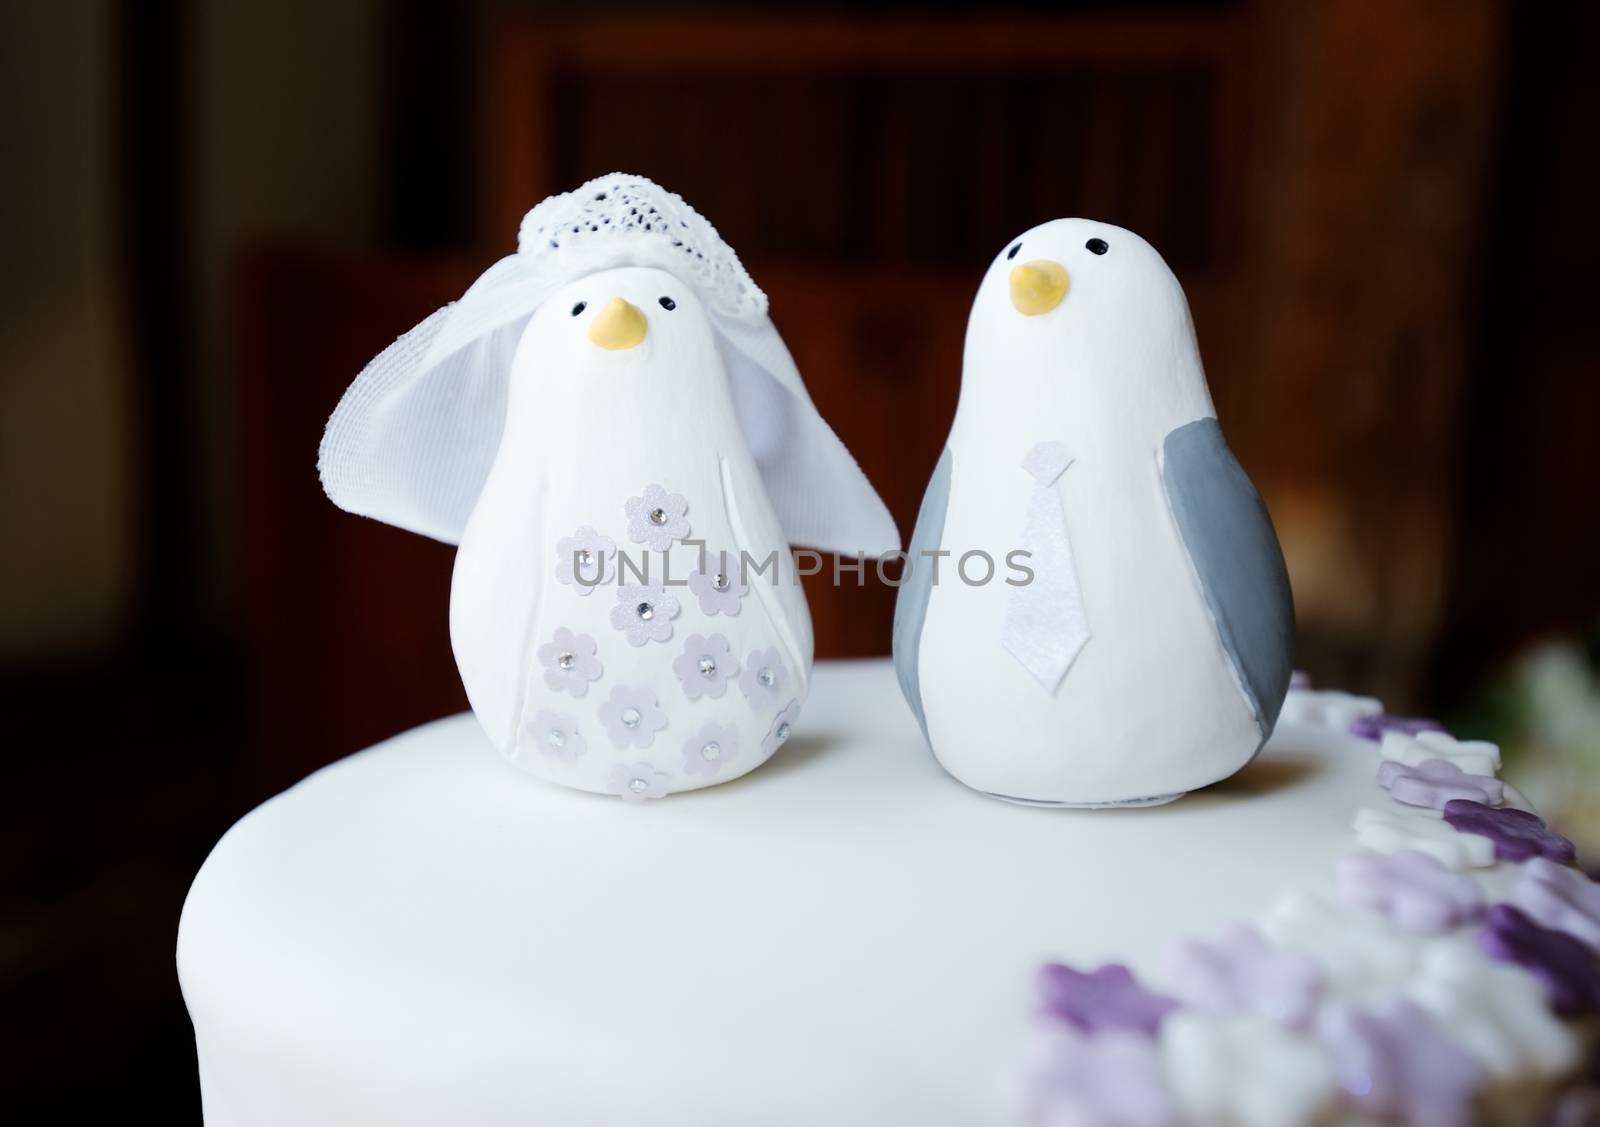 Wedding cake topper closeup detail of bride and groom penguins